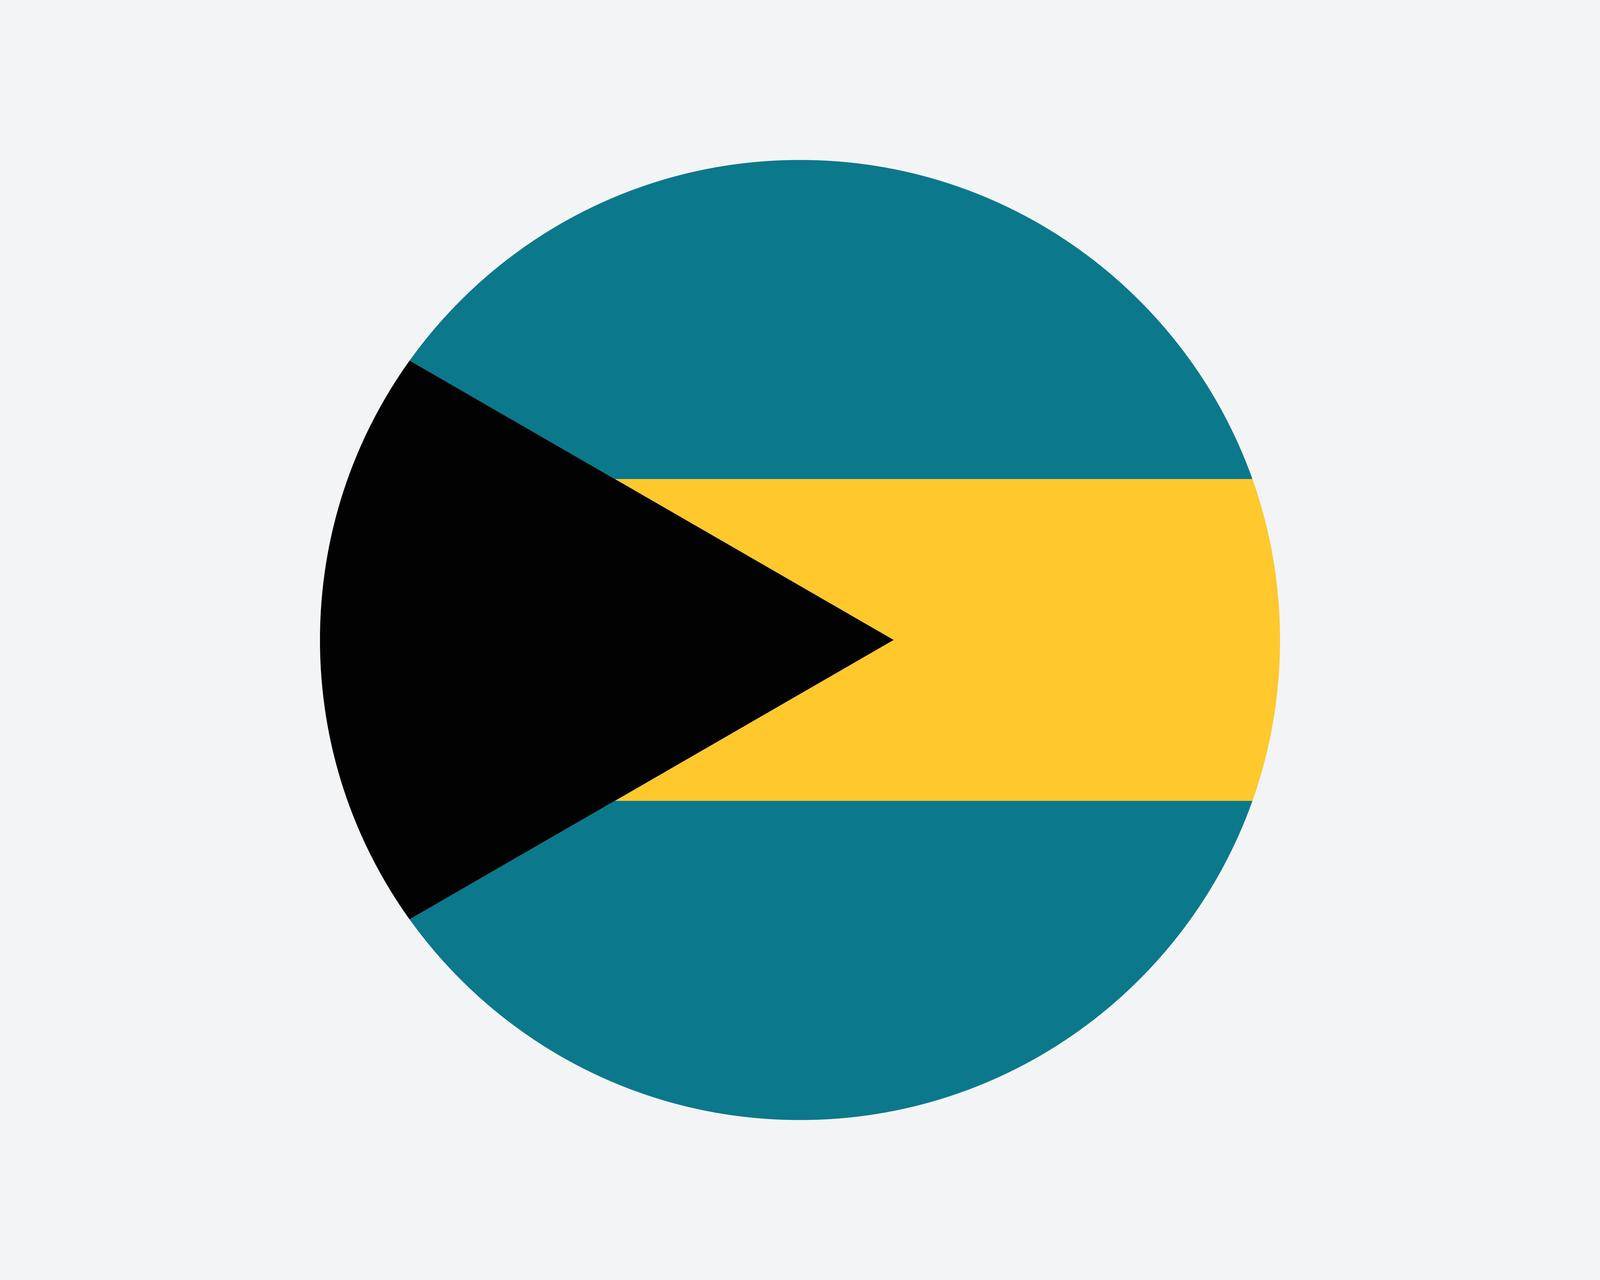 The Bahamas Round Country Flag. Circular Bahamian National Flag. Commonwealth of The Bahamas Circle Shape Button Banner. EPS Vector Illustration.